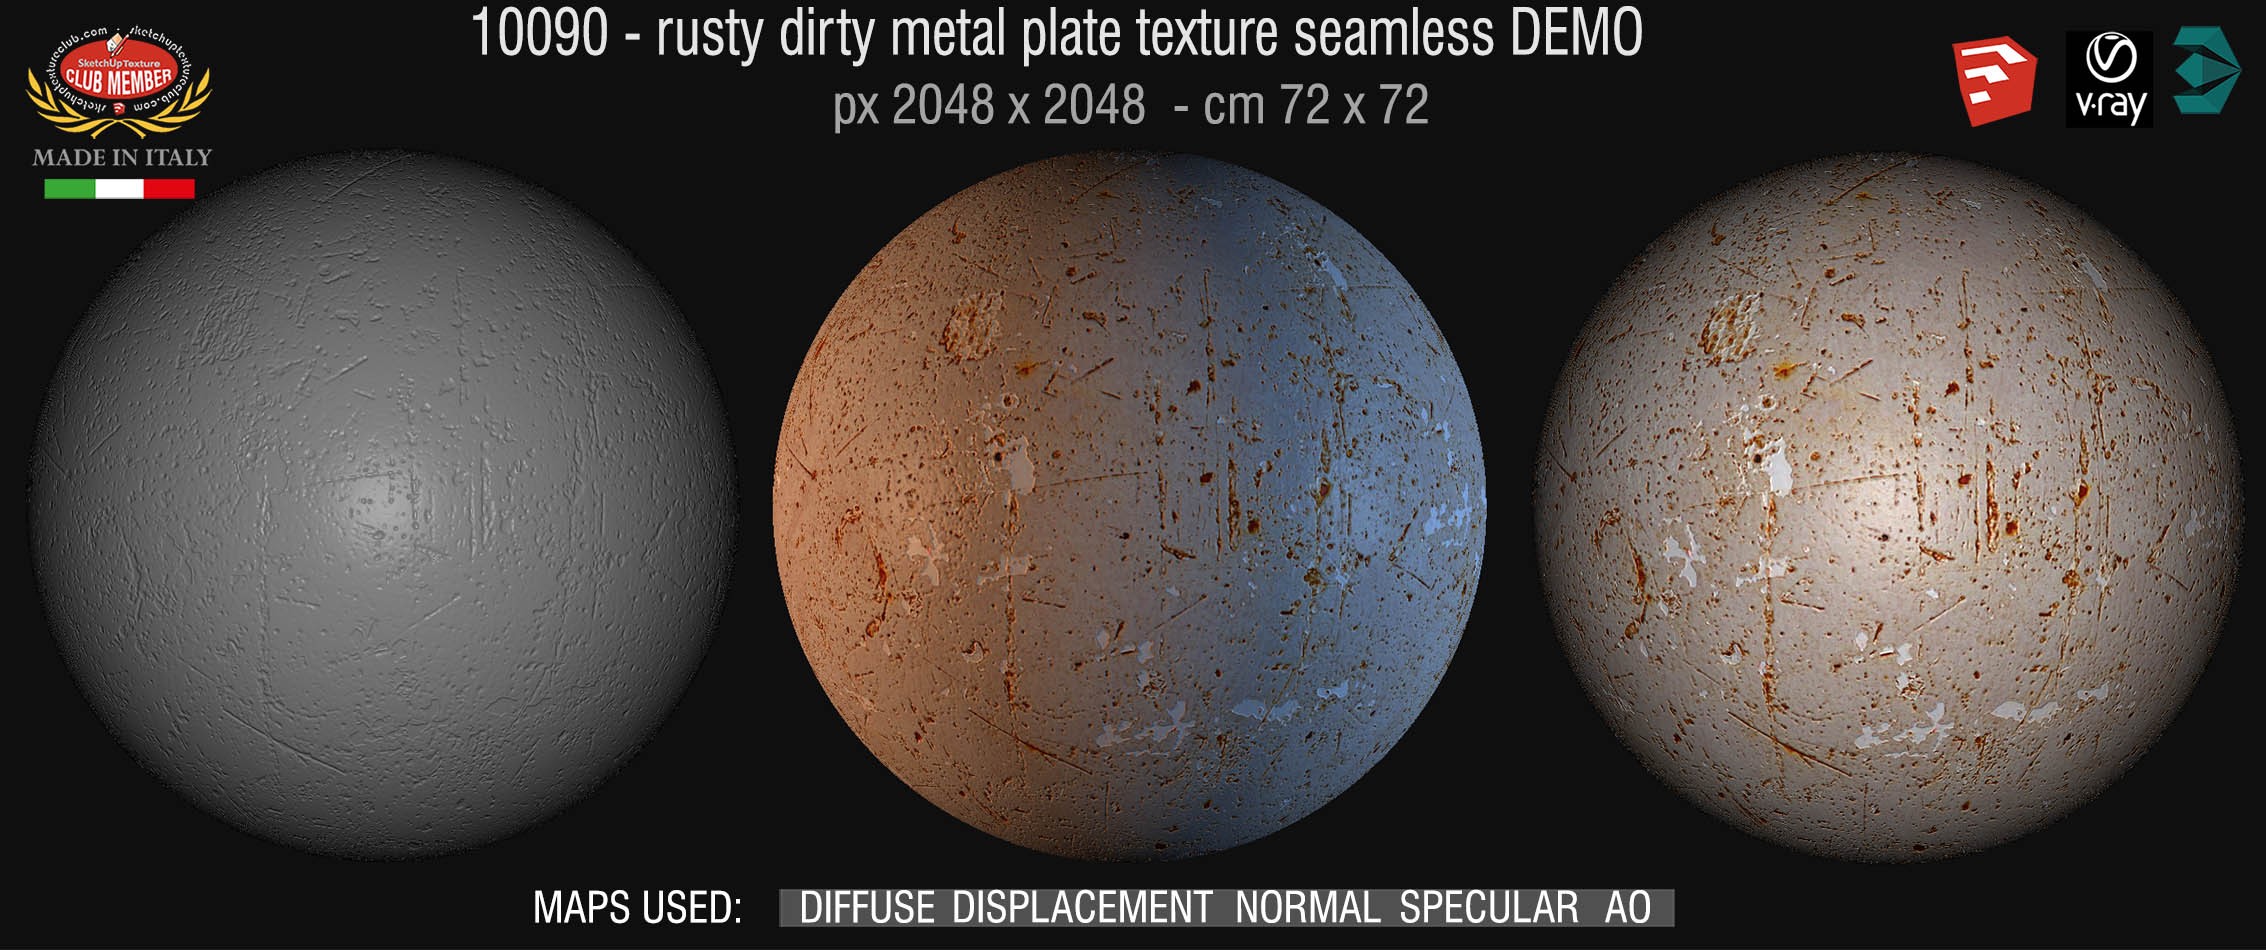 10090 HR Rusty dirty metal texture seamless + maps DEMO